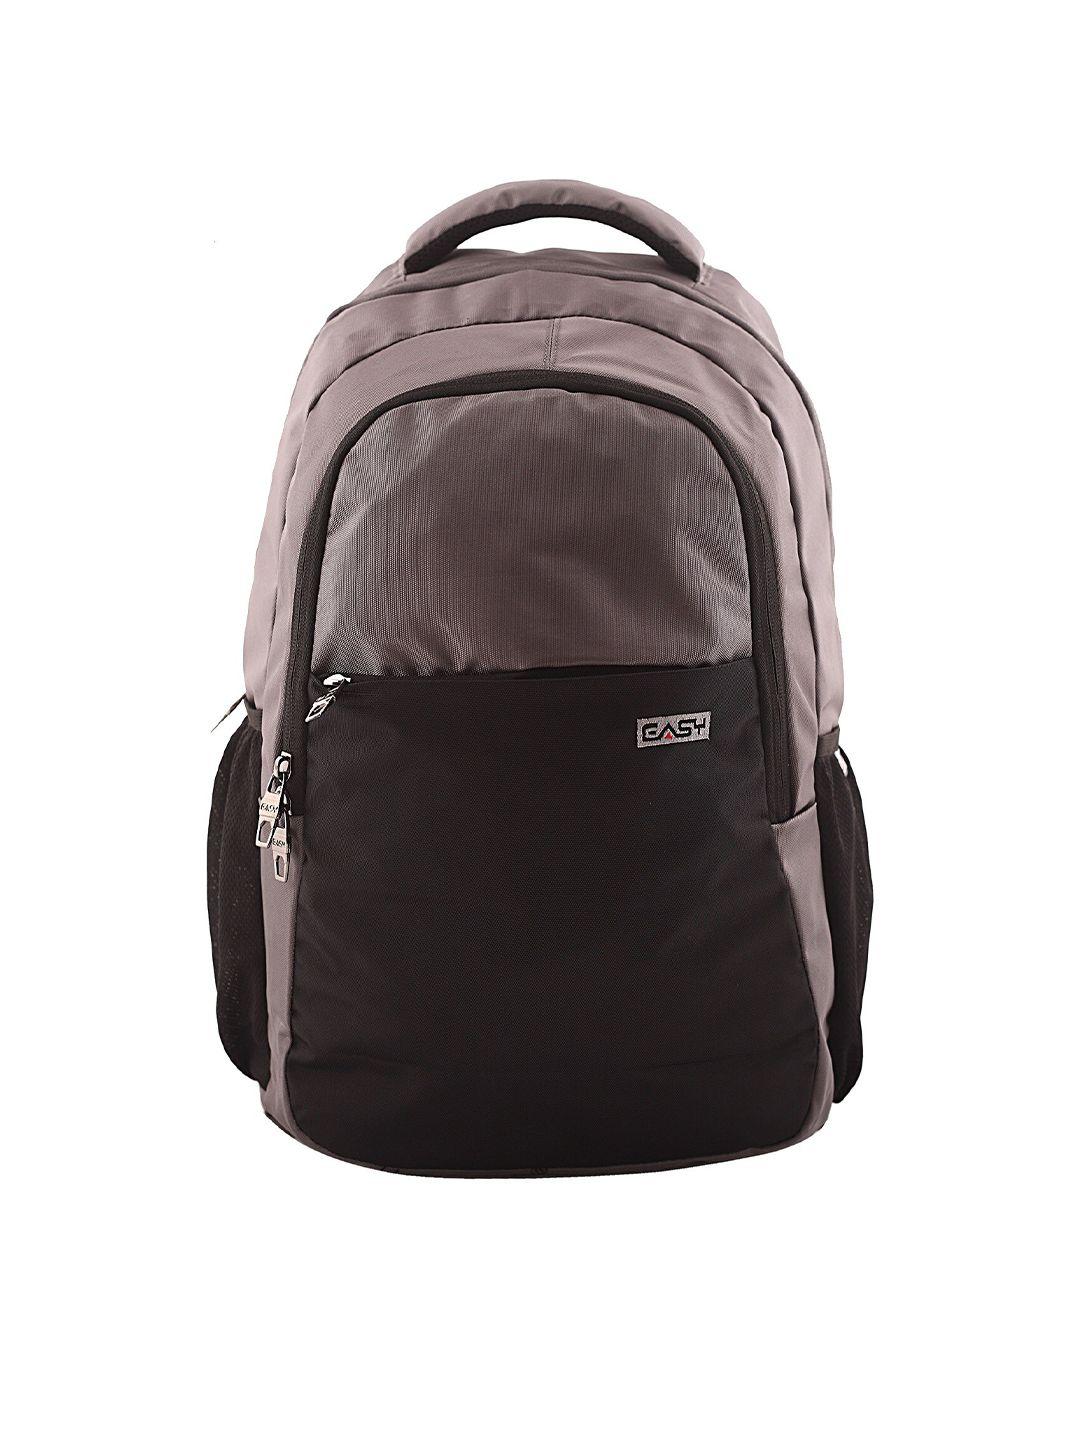 easy colourblocked backpack